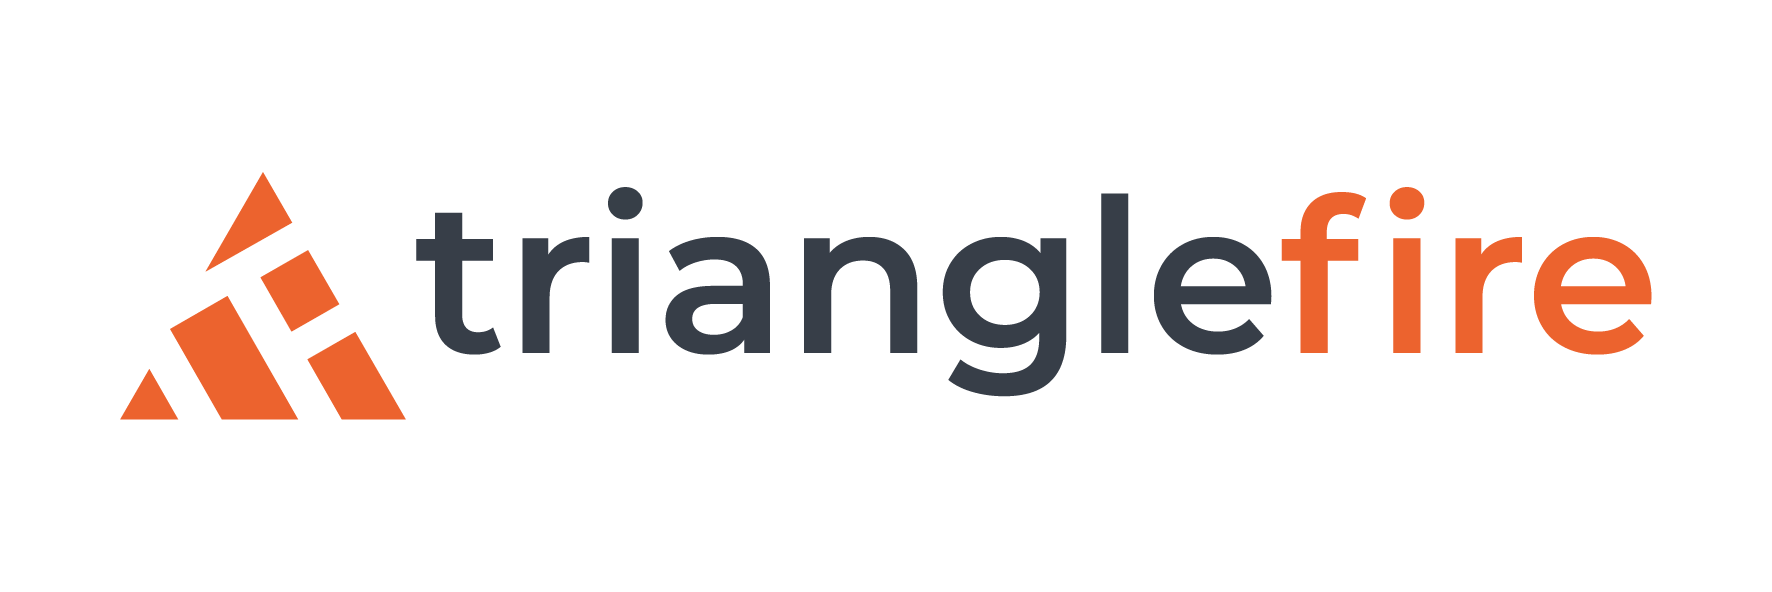 trianglefire logo - triangle orange logo with the words 'triangle fire' following